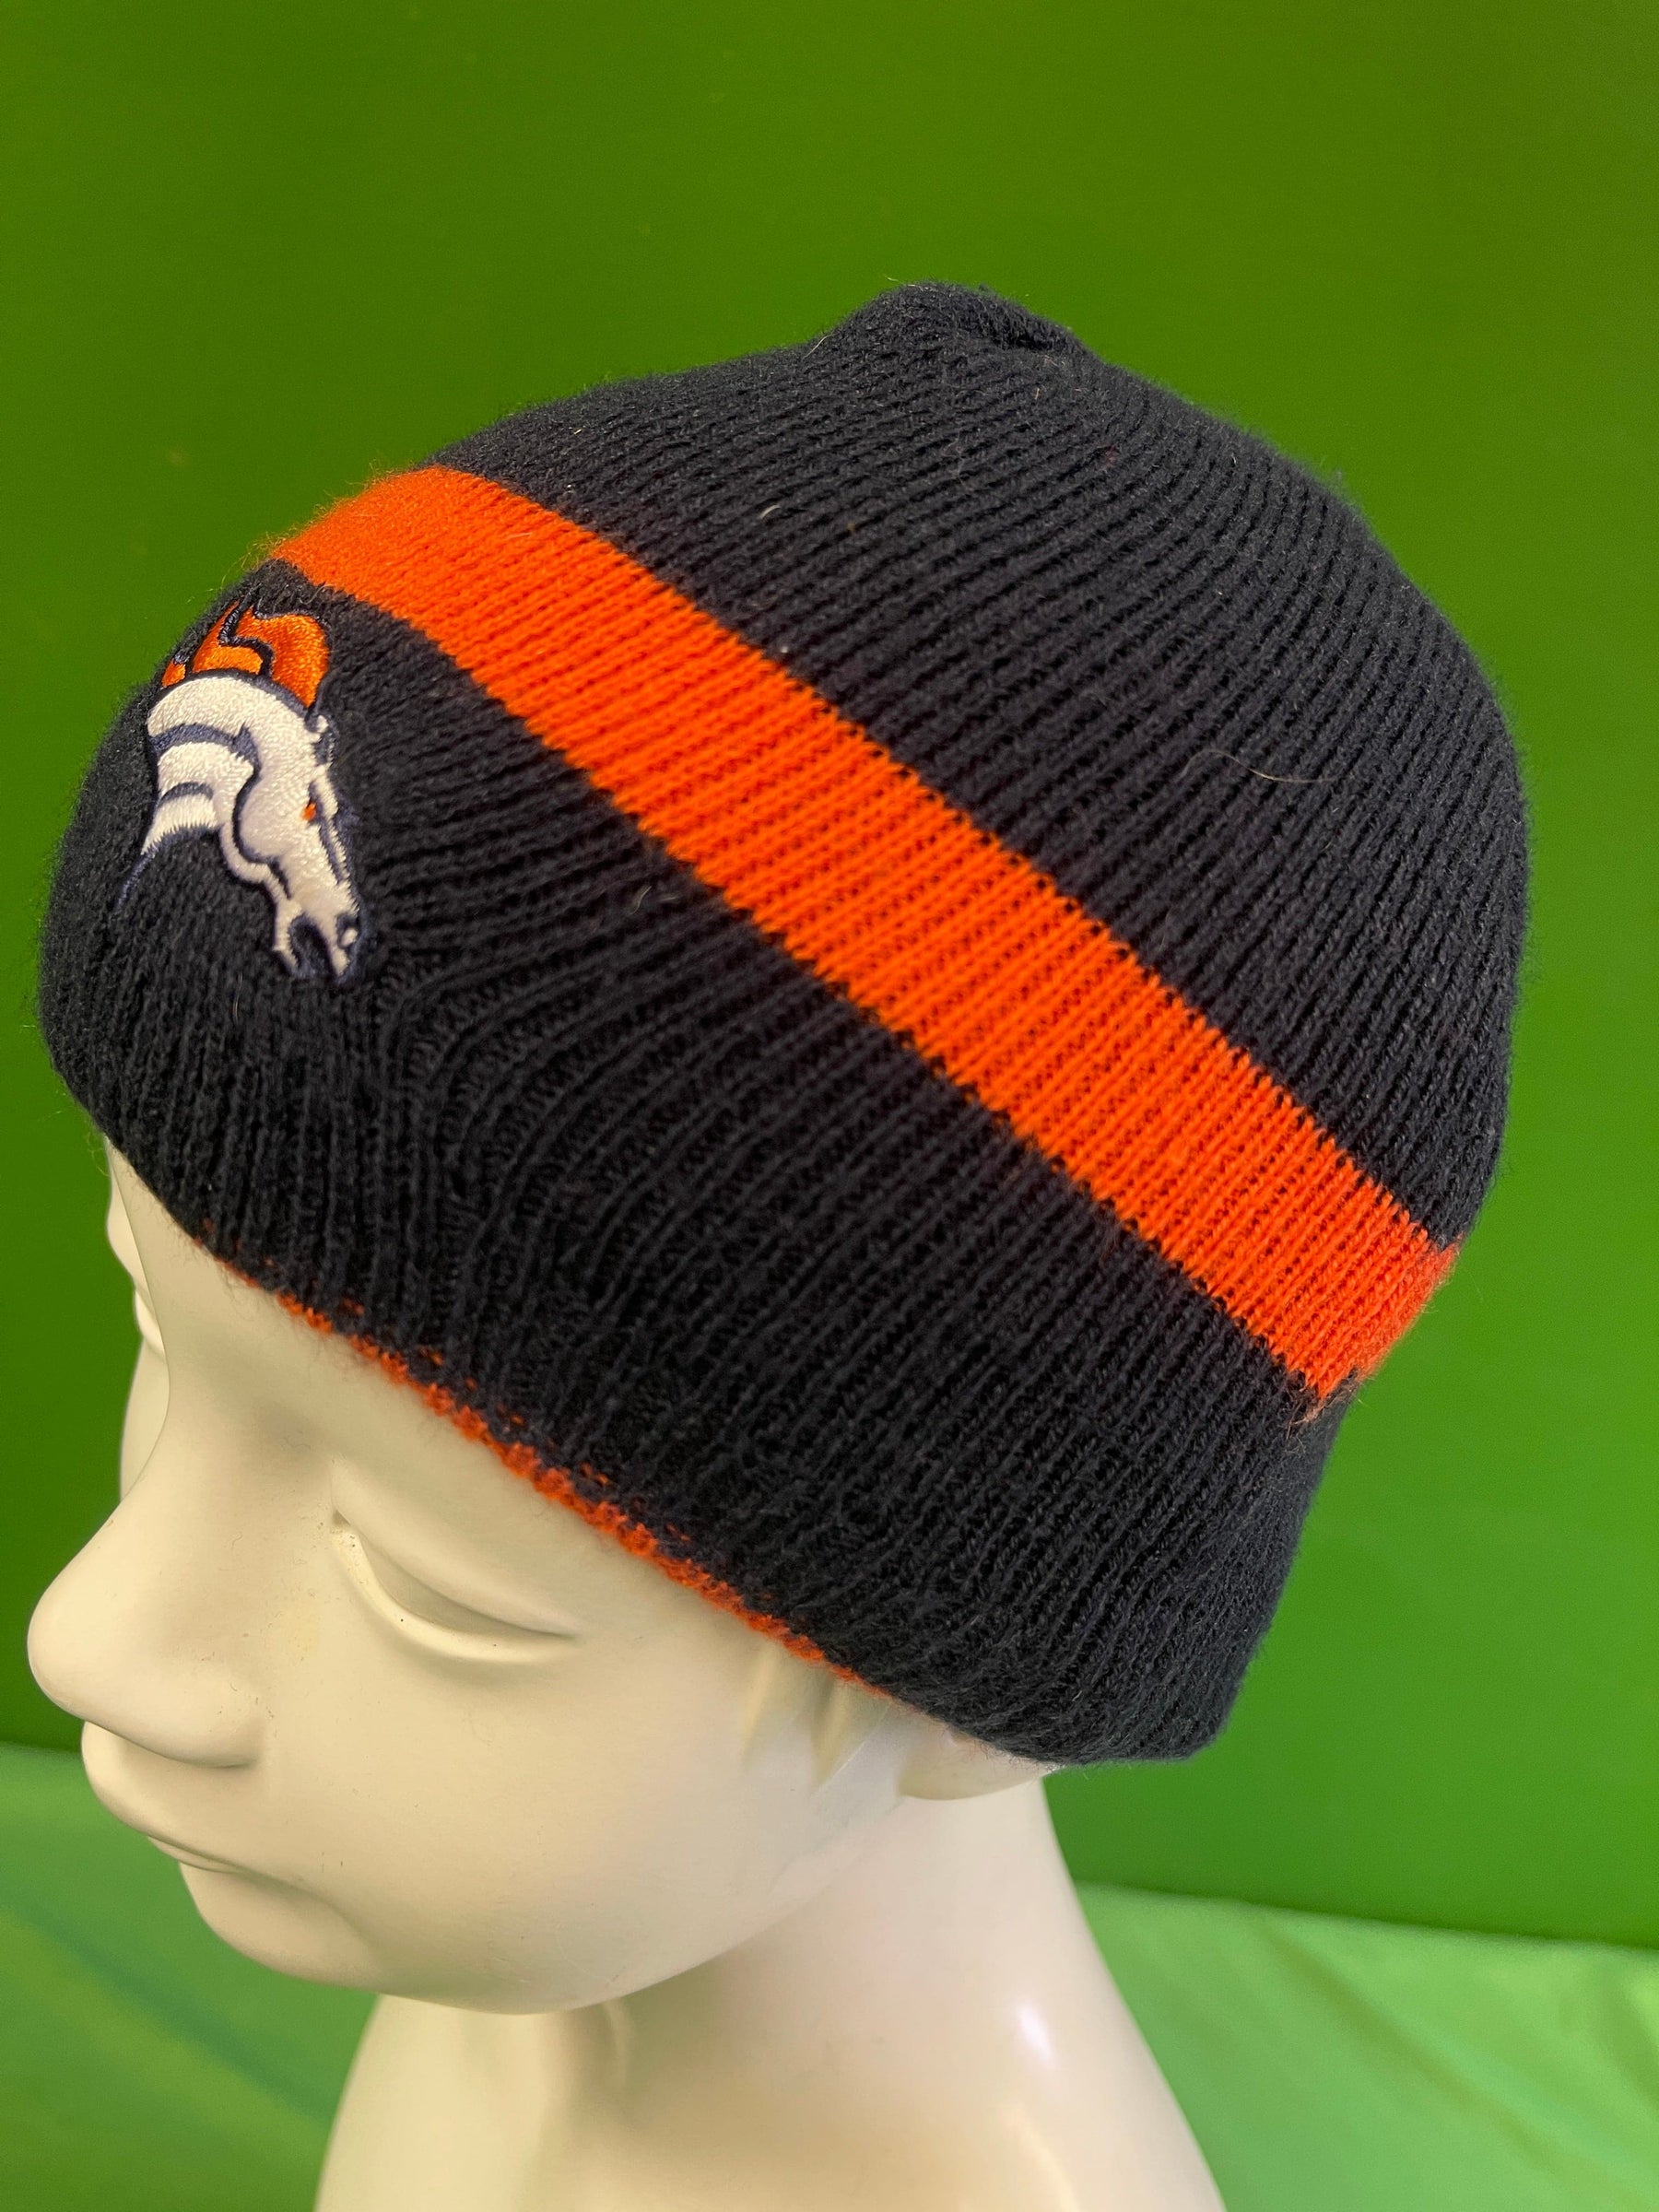 NFL Denver Broncos Acrylic Beanie Woolly Hat Youth Kids' OSFM